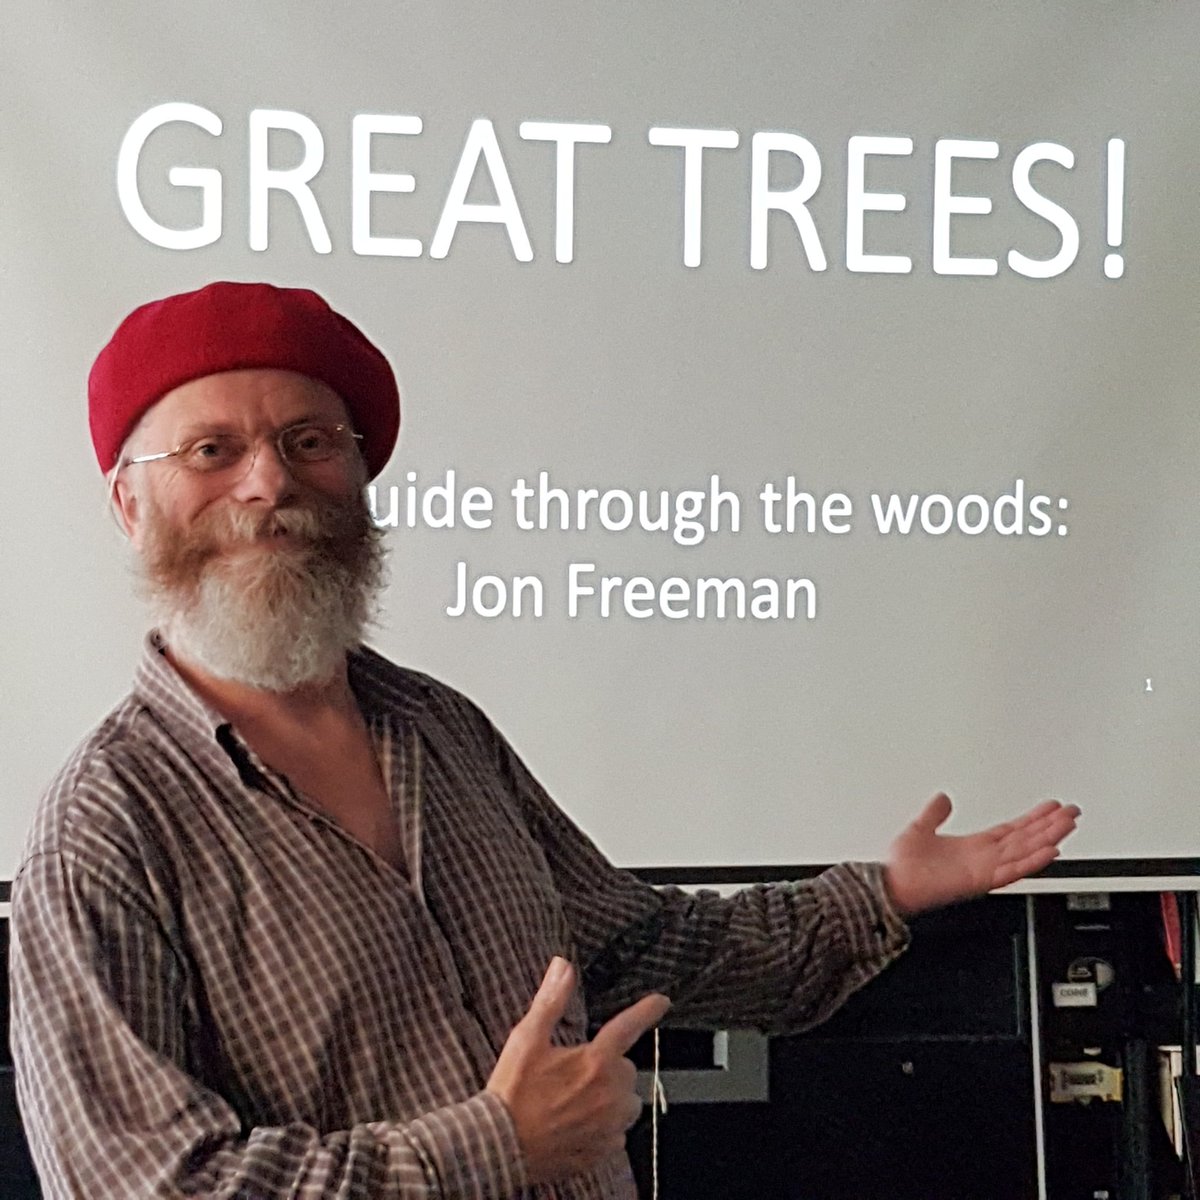 Only a few minutes until @TheJonFreeman begins his talk about #GreatTrees. @ClystGreatTrees @stthomaslib @HeritageFundSW @WoodlandTrust @oldweirdbritain 
#libraries
#ScienceInTheLibrary